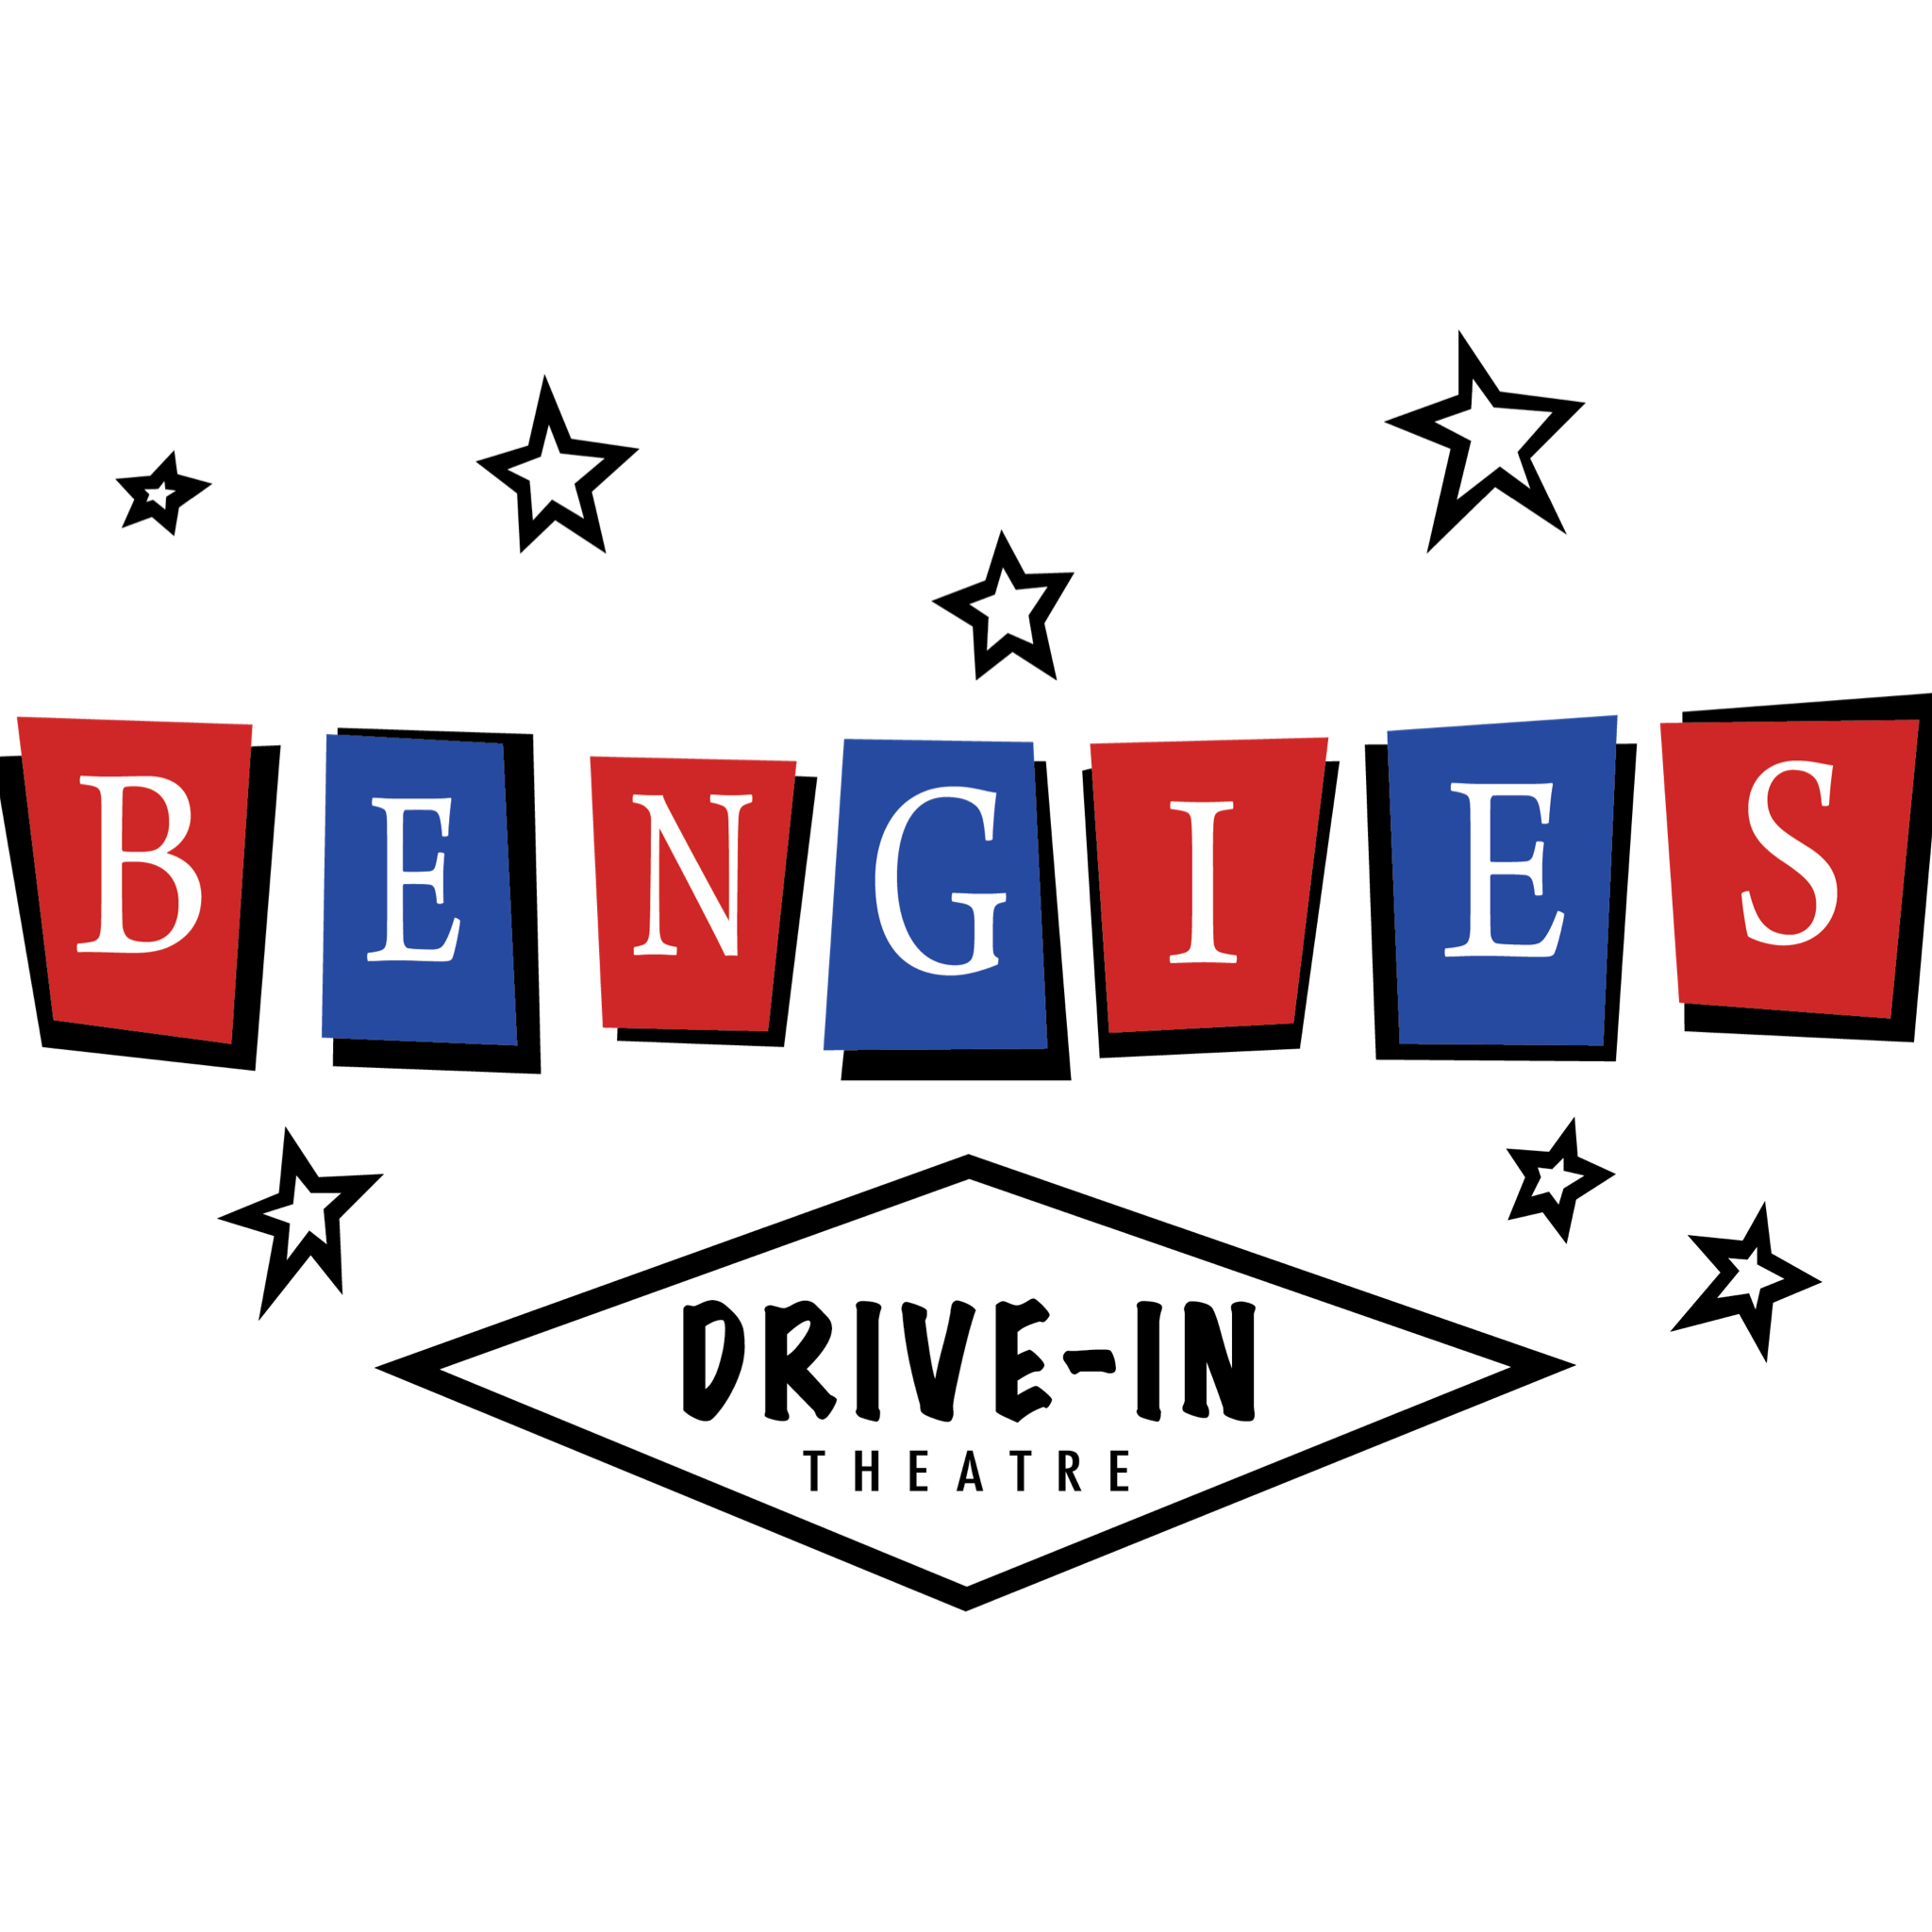 Bengies Drive-In Theatre